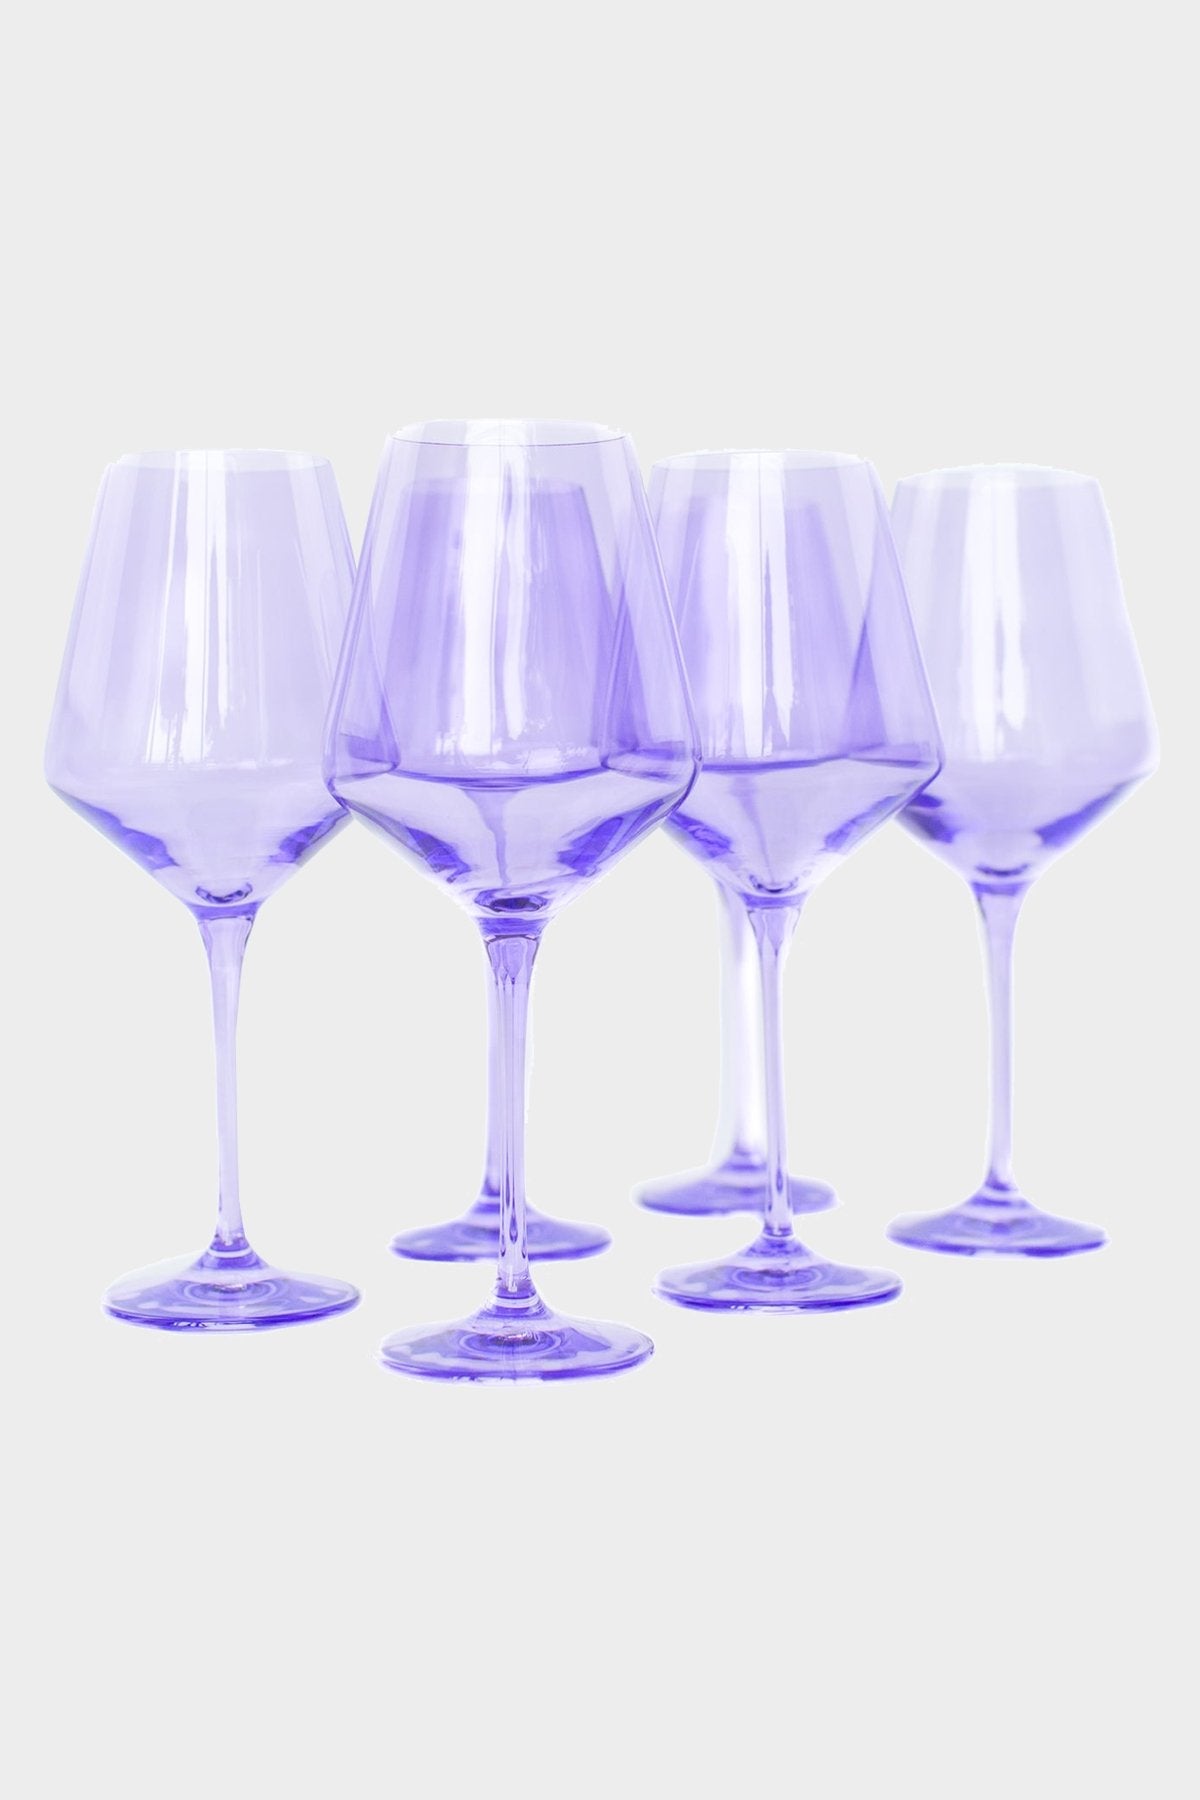 Wine Stemware Glass in Lavender - Set of 6 - shop-olivia.com